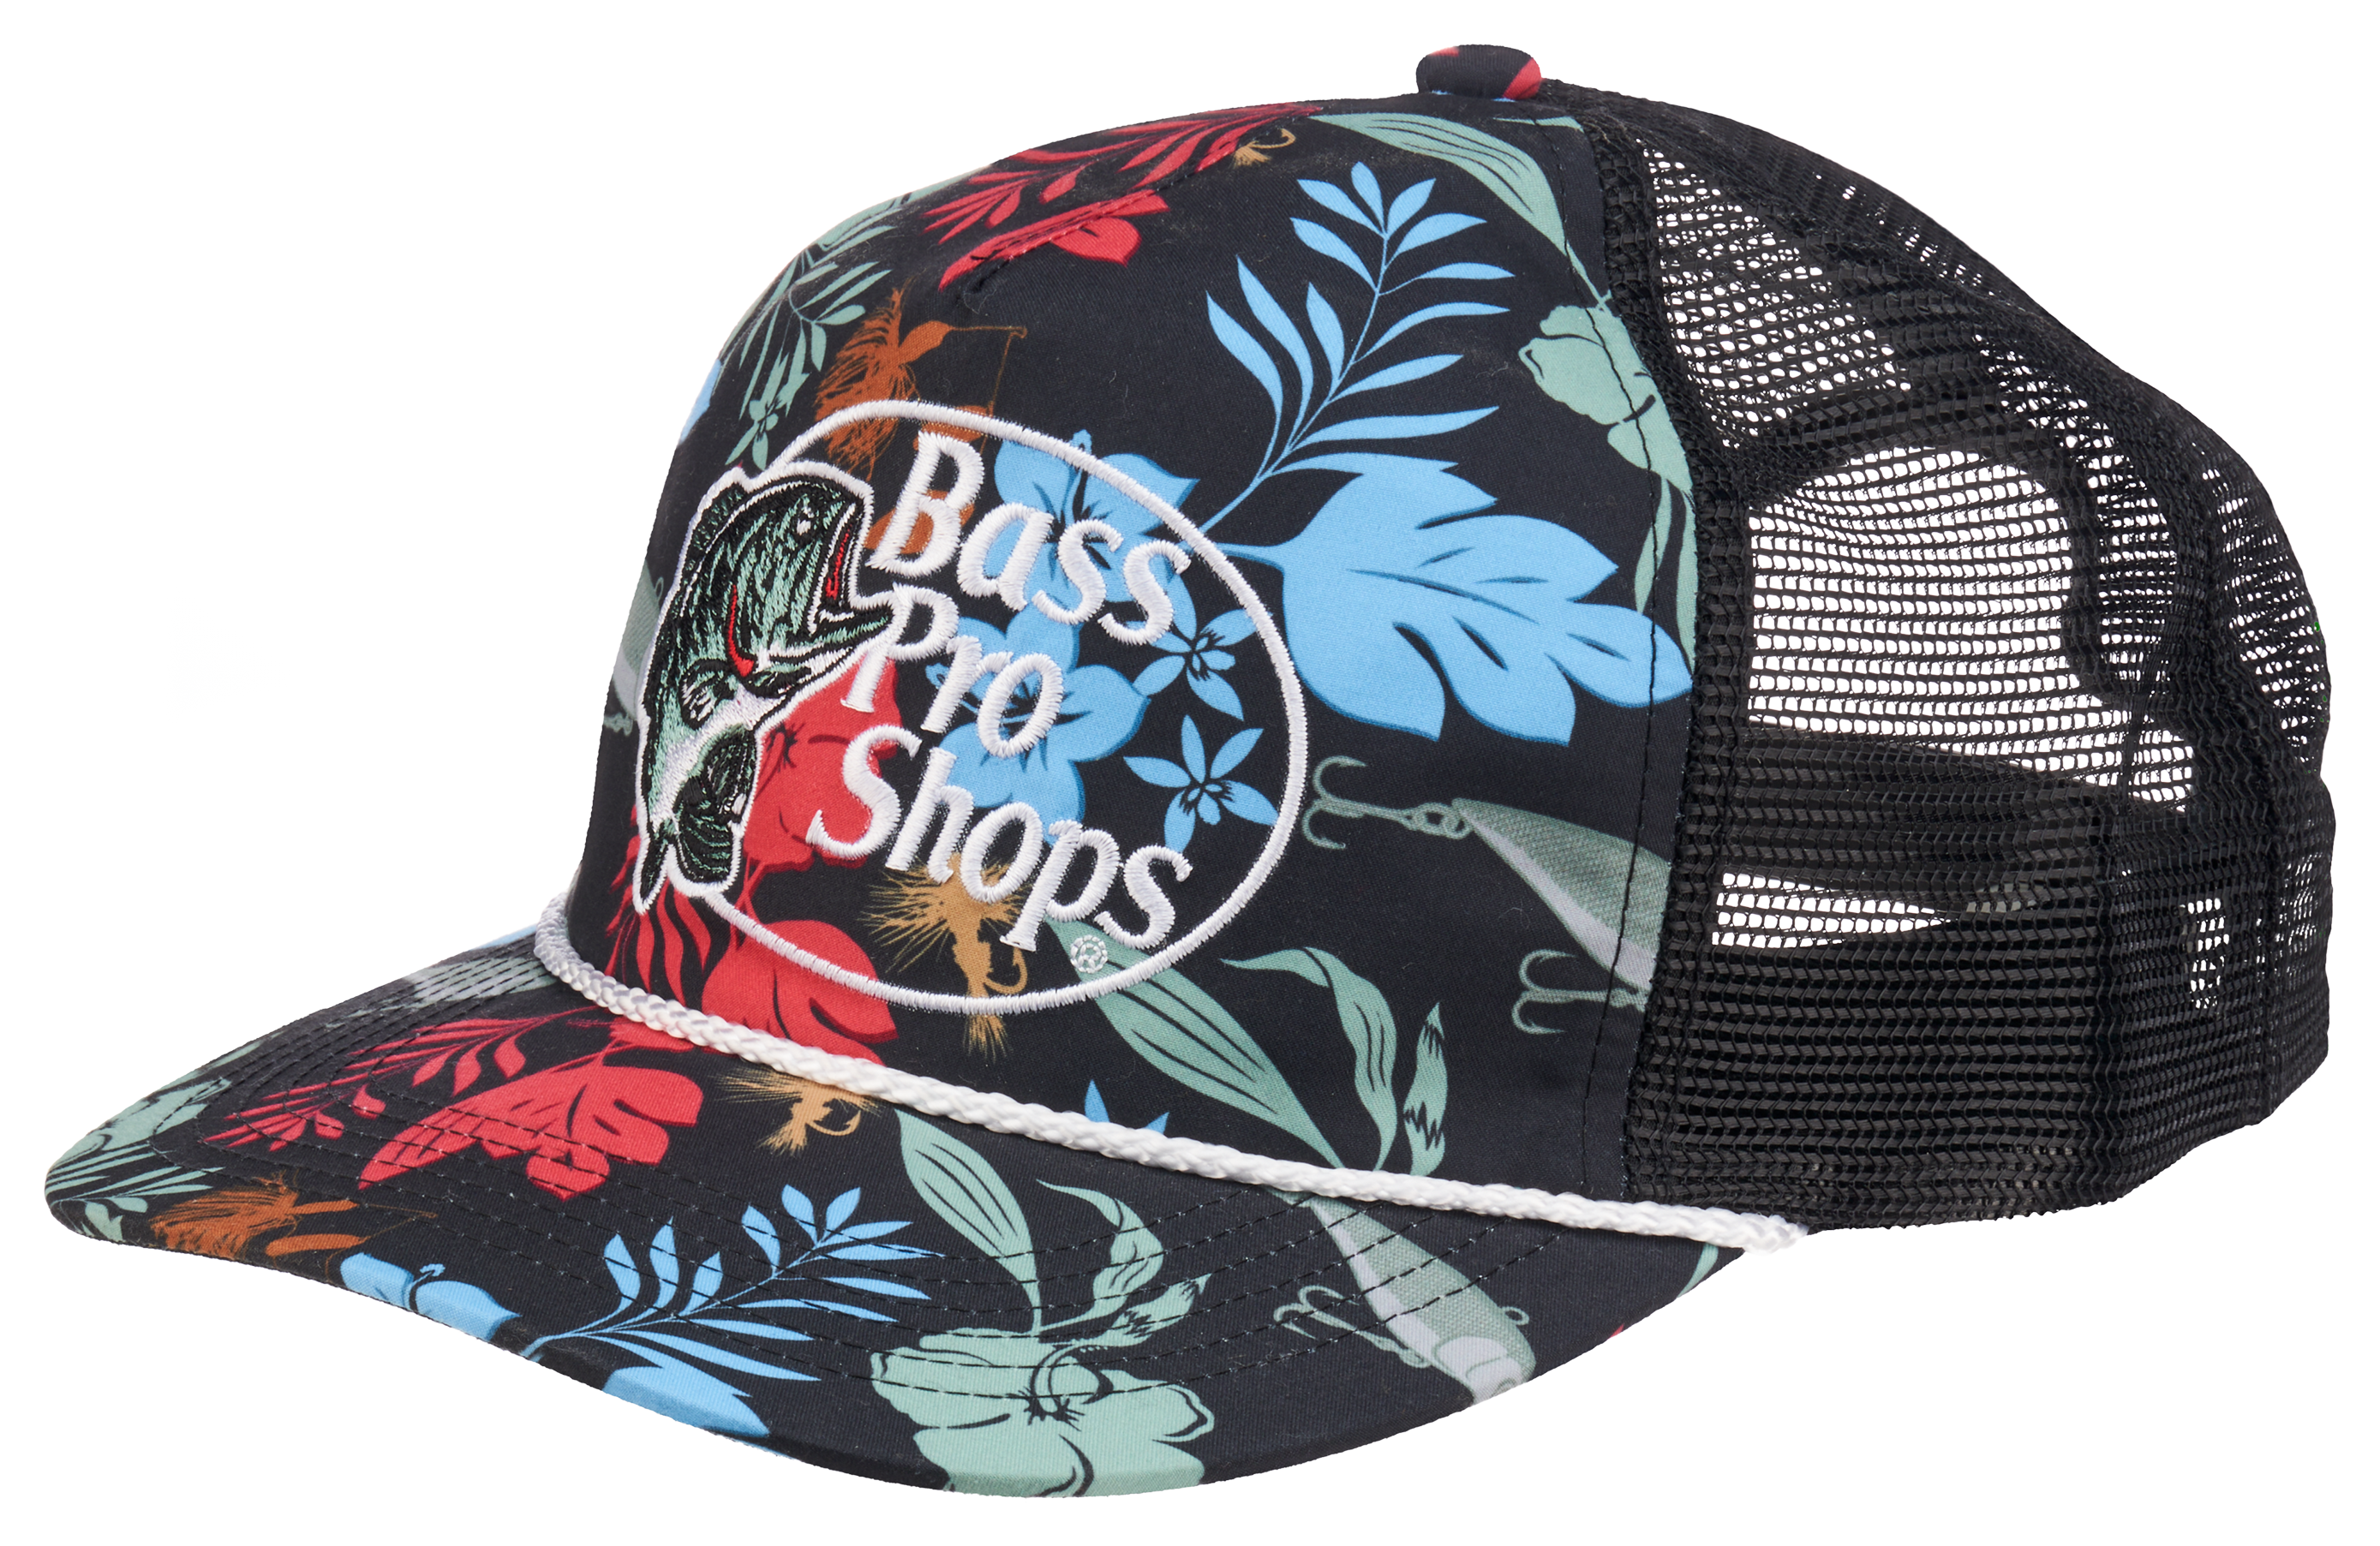 Bass Pro Shops, Other, Bass Pro Shop Hat